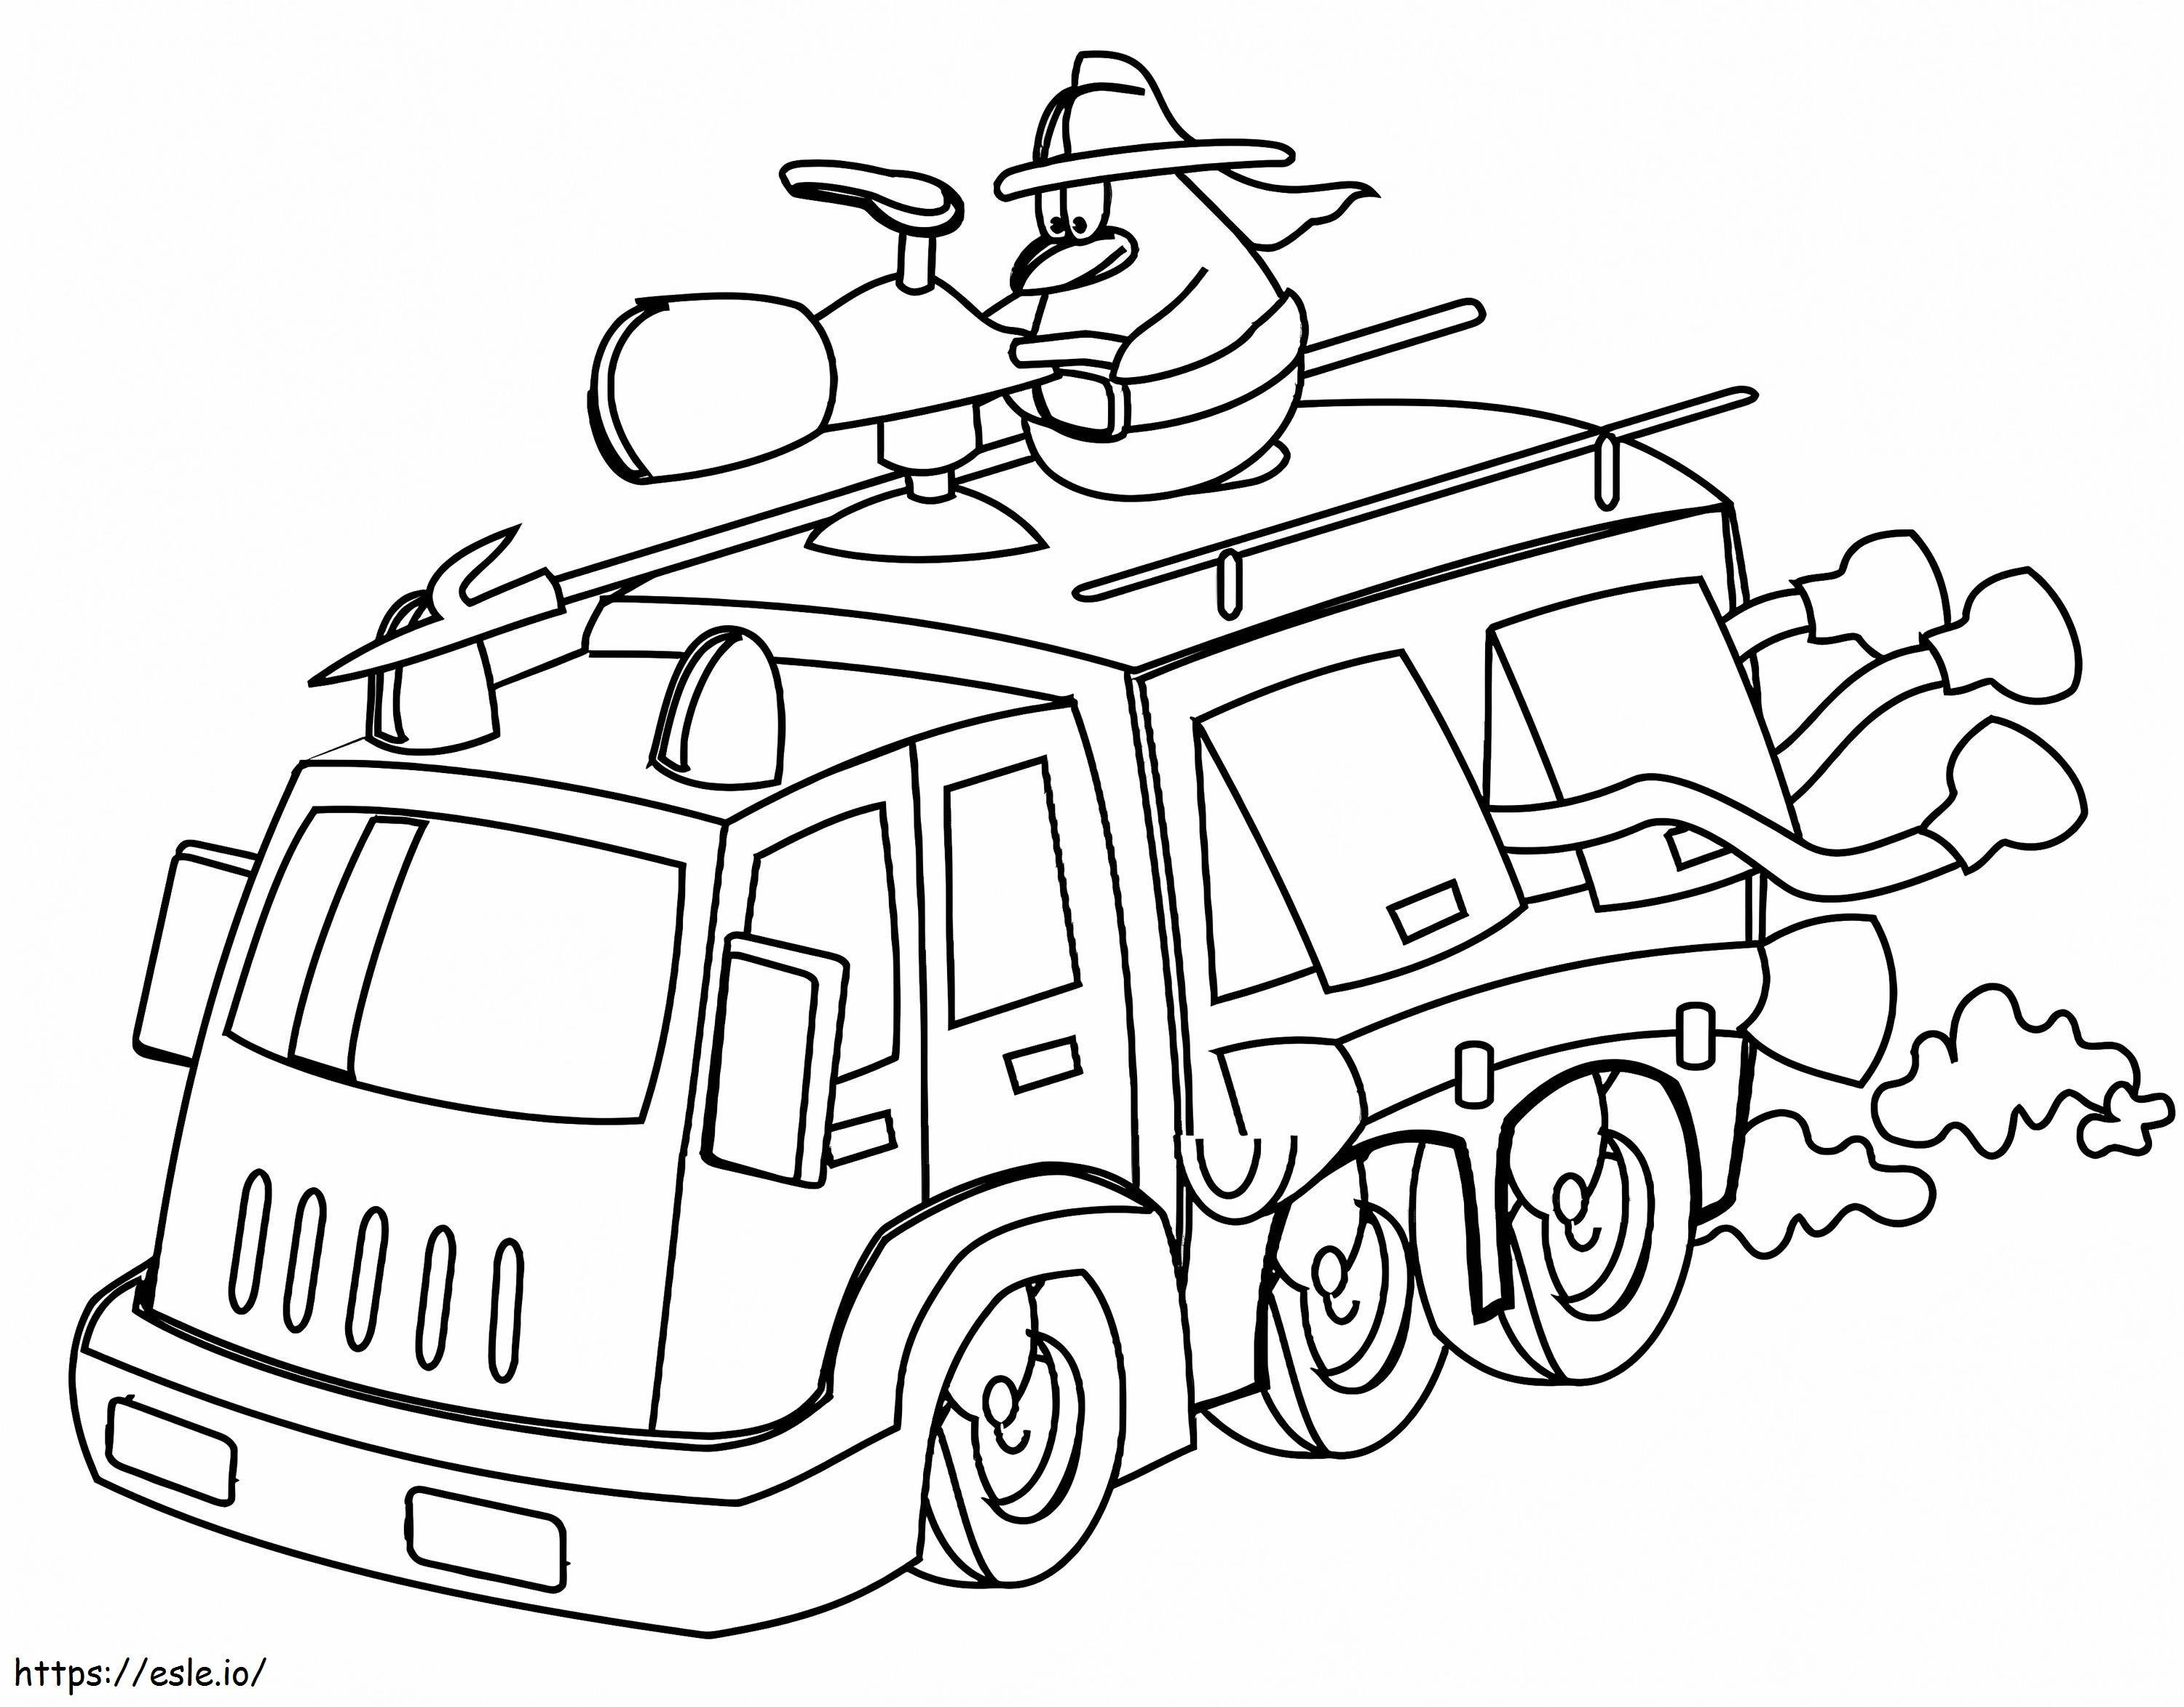  Camión de bomberos de dibujos animados para colorear